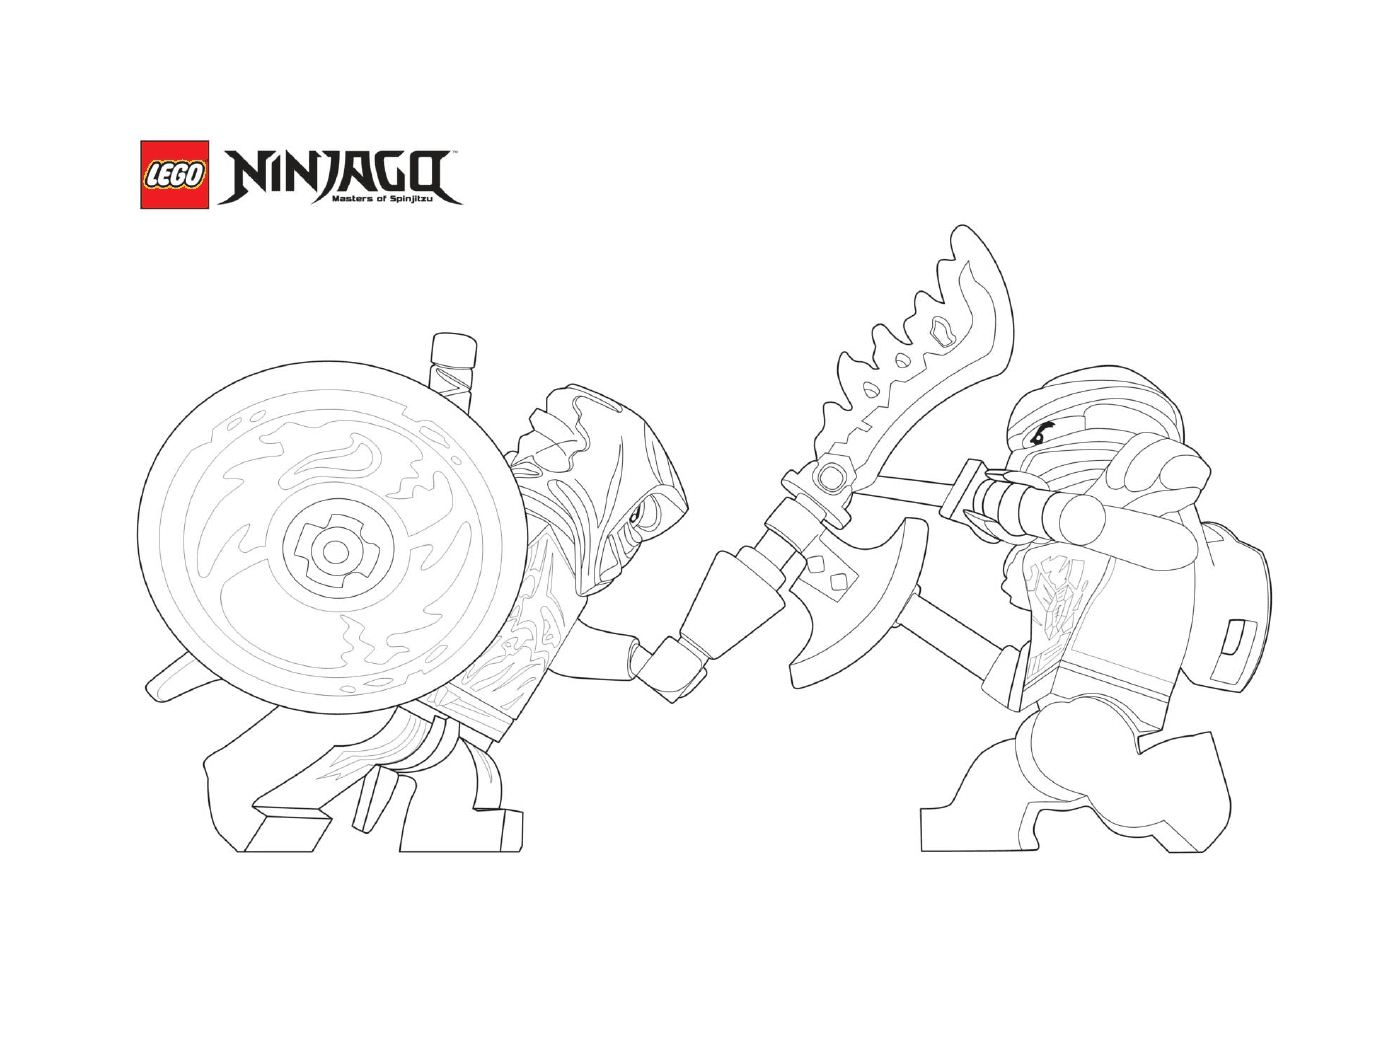  Two ninjagos in combat mode 